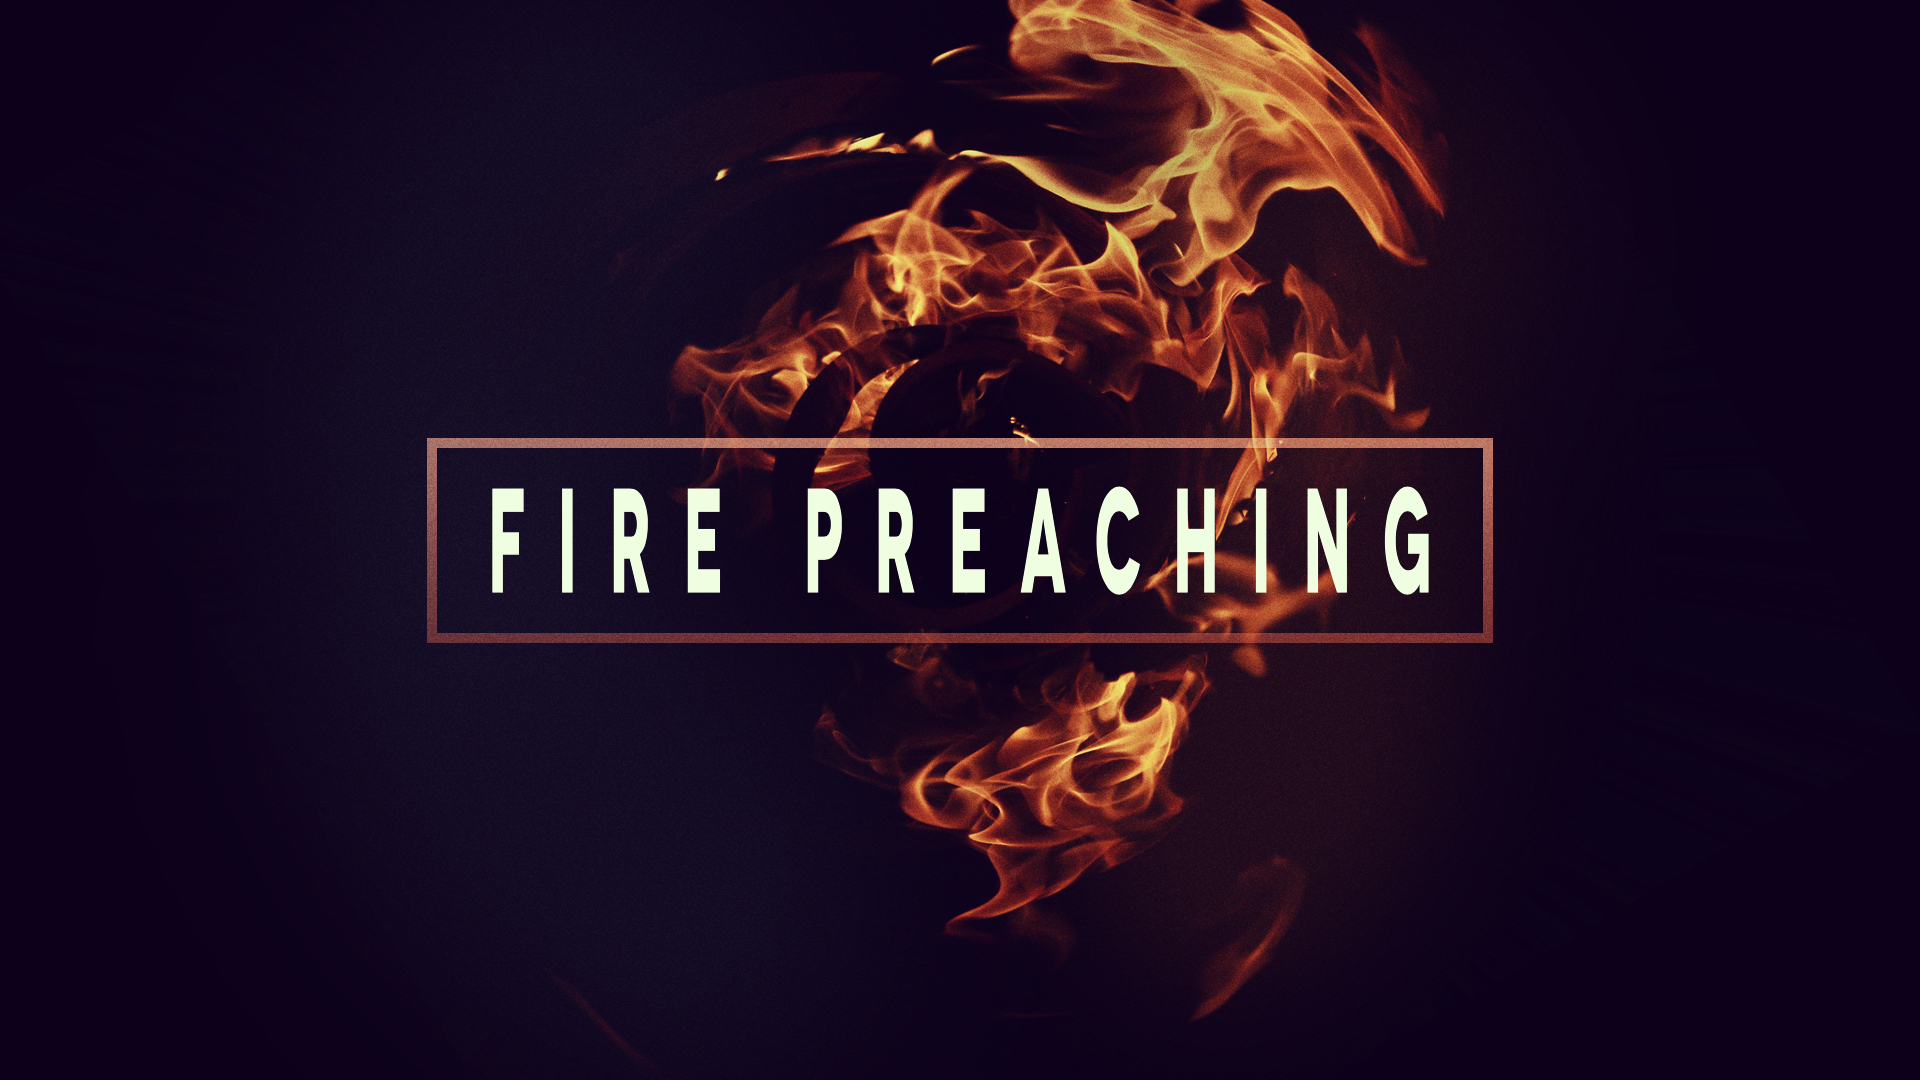 FIRE PREACHING 2